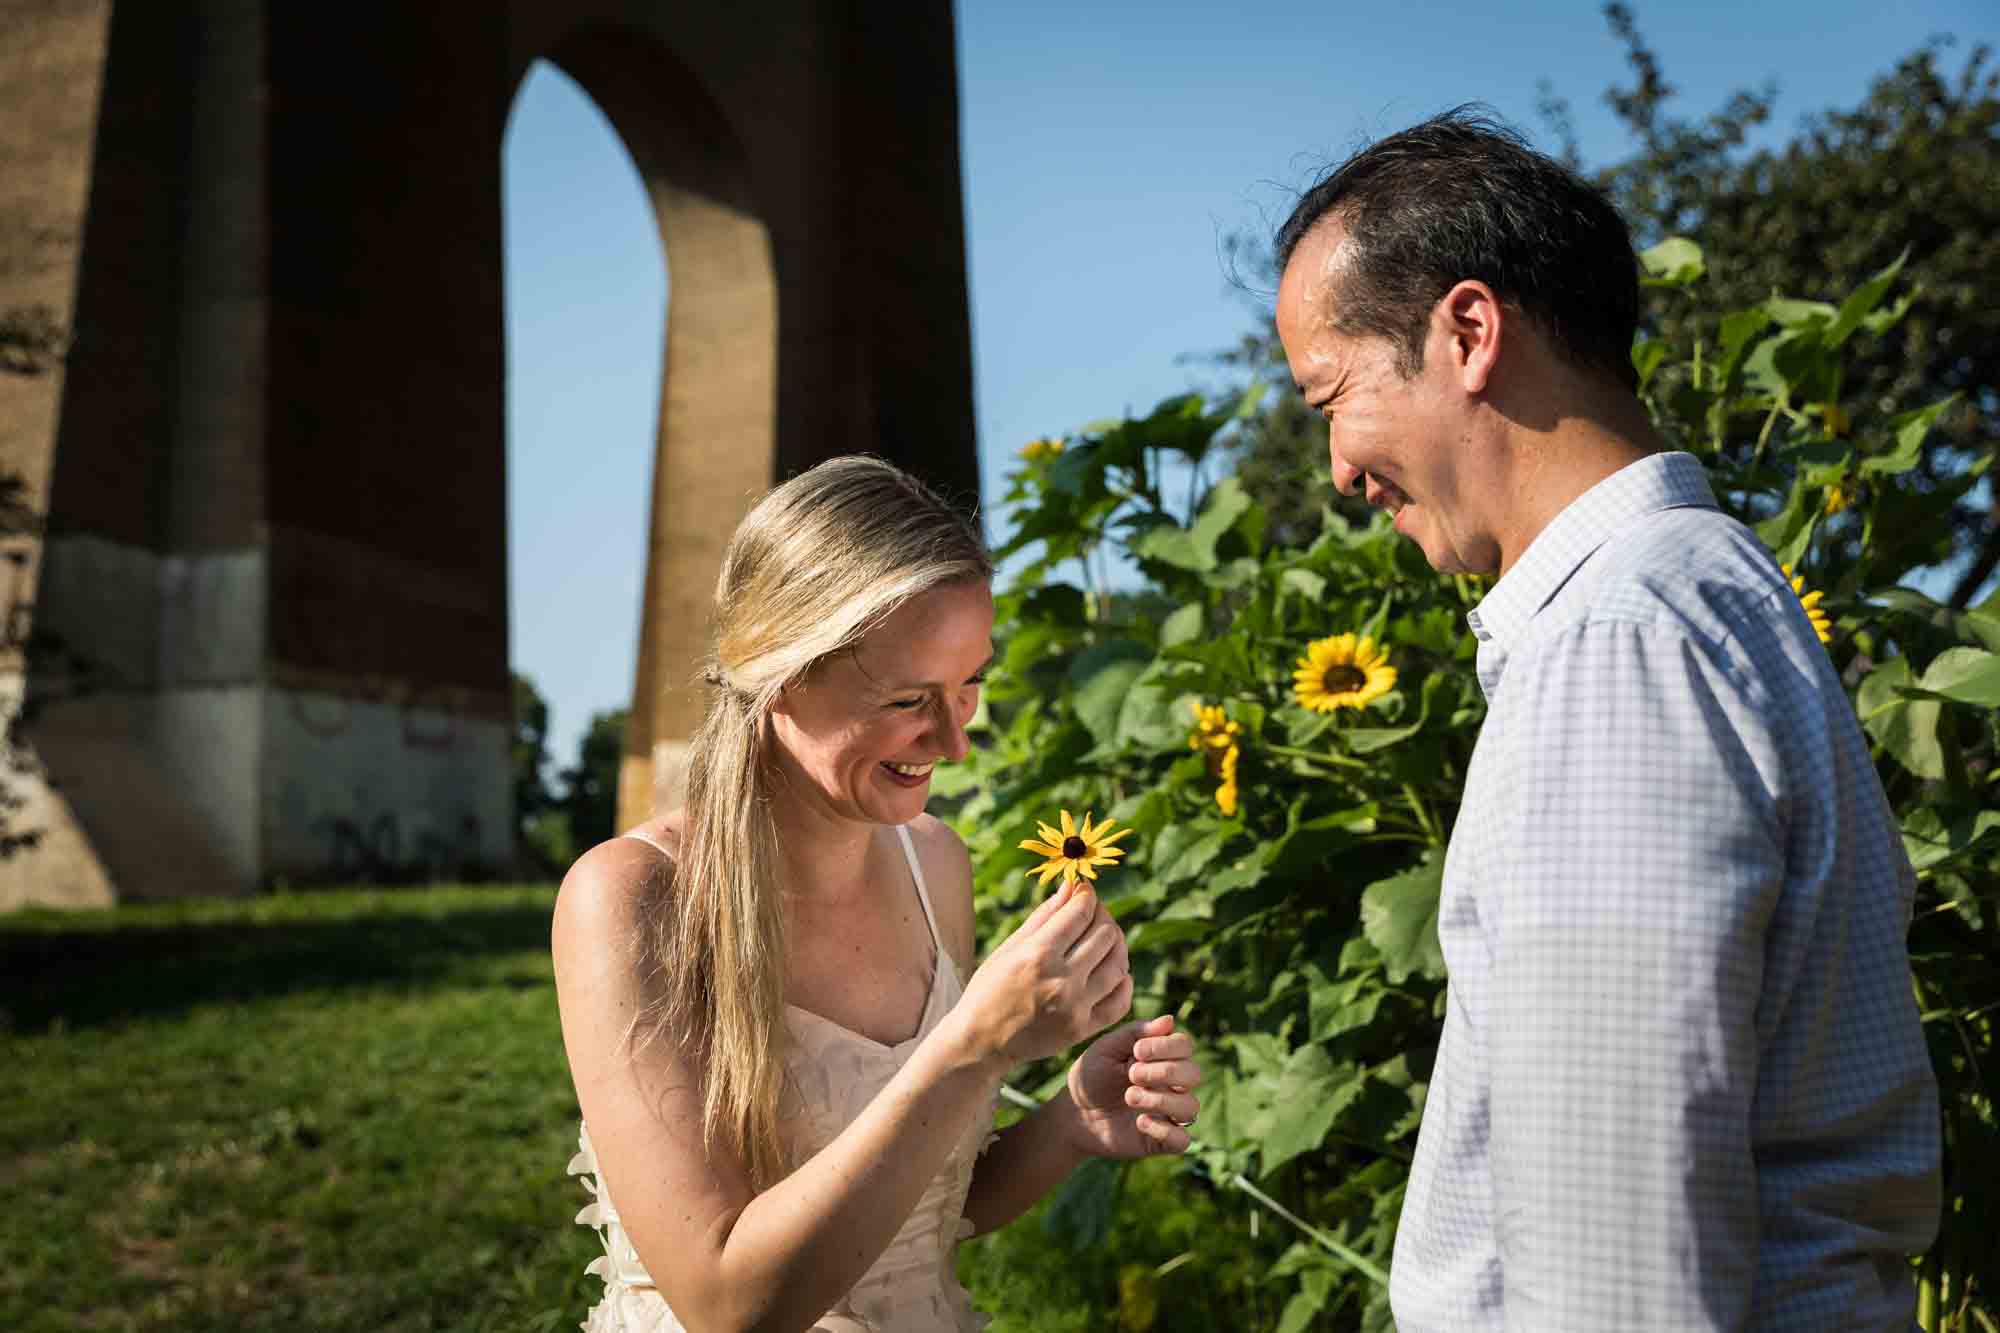 Astoria Park engagement photos of a man giving a sunflower to a woman under Hell Gate Bridge